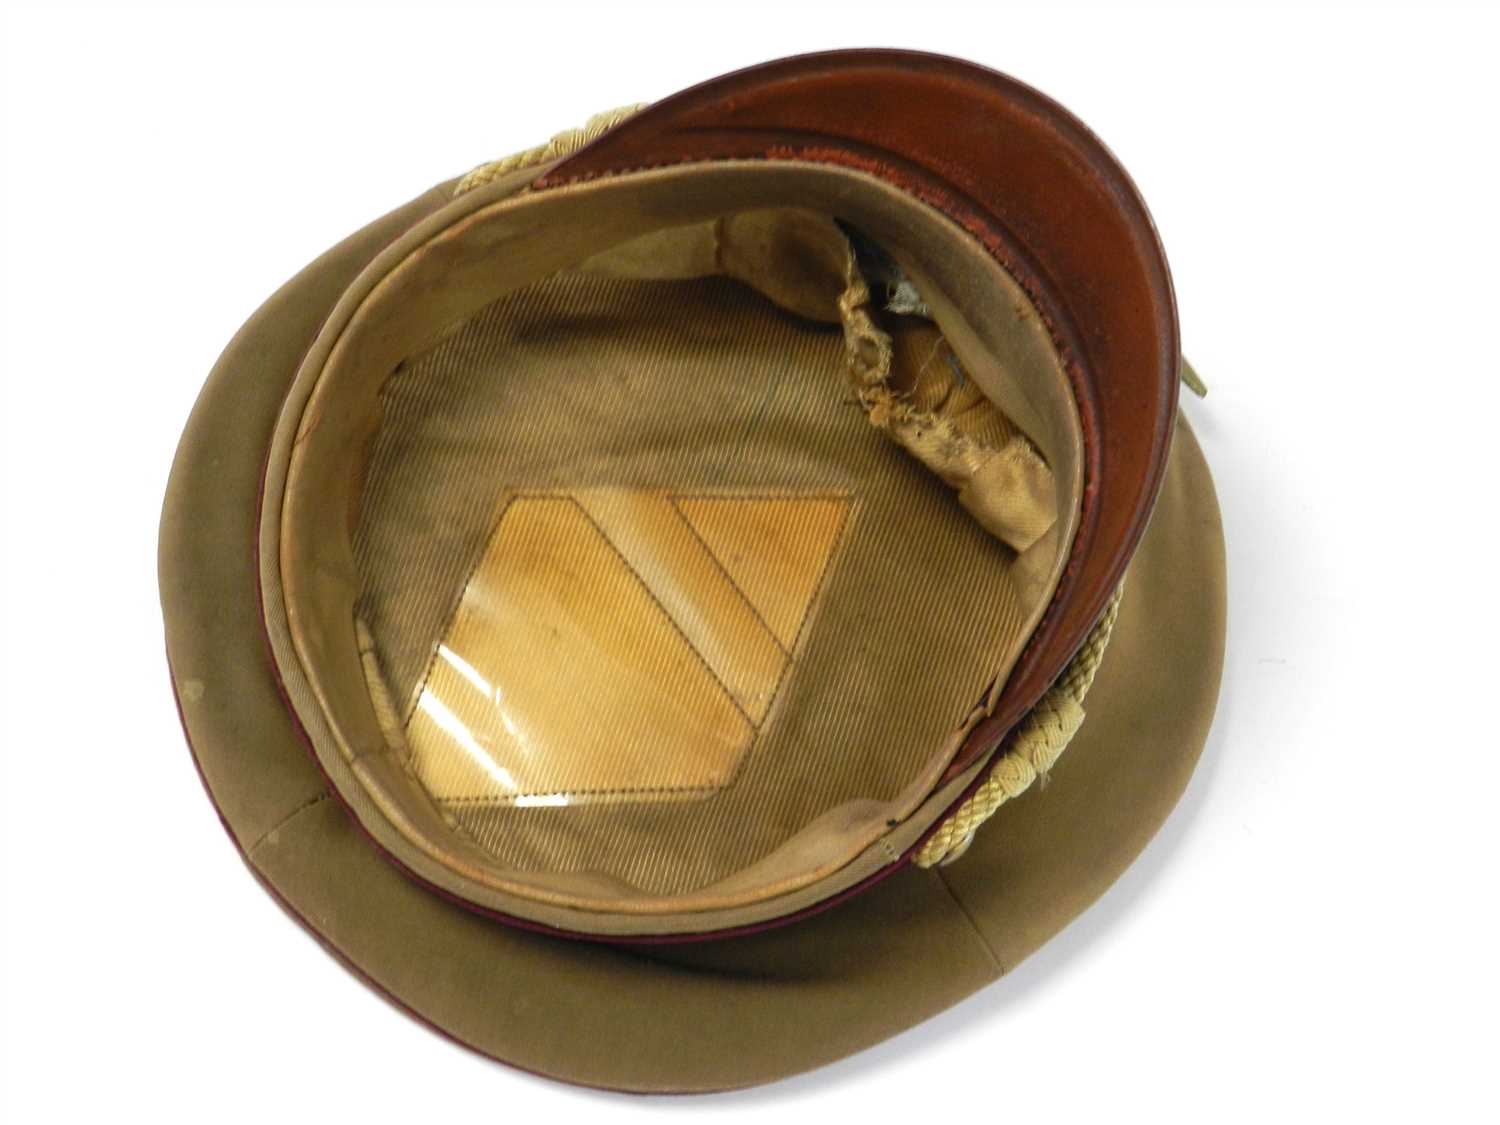 † An NSDAP German third Reich Gauleiter-level Political Leader's visor cap - Image 2 of 3